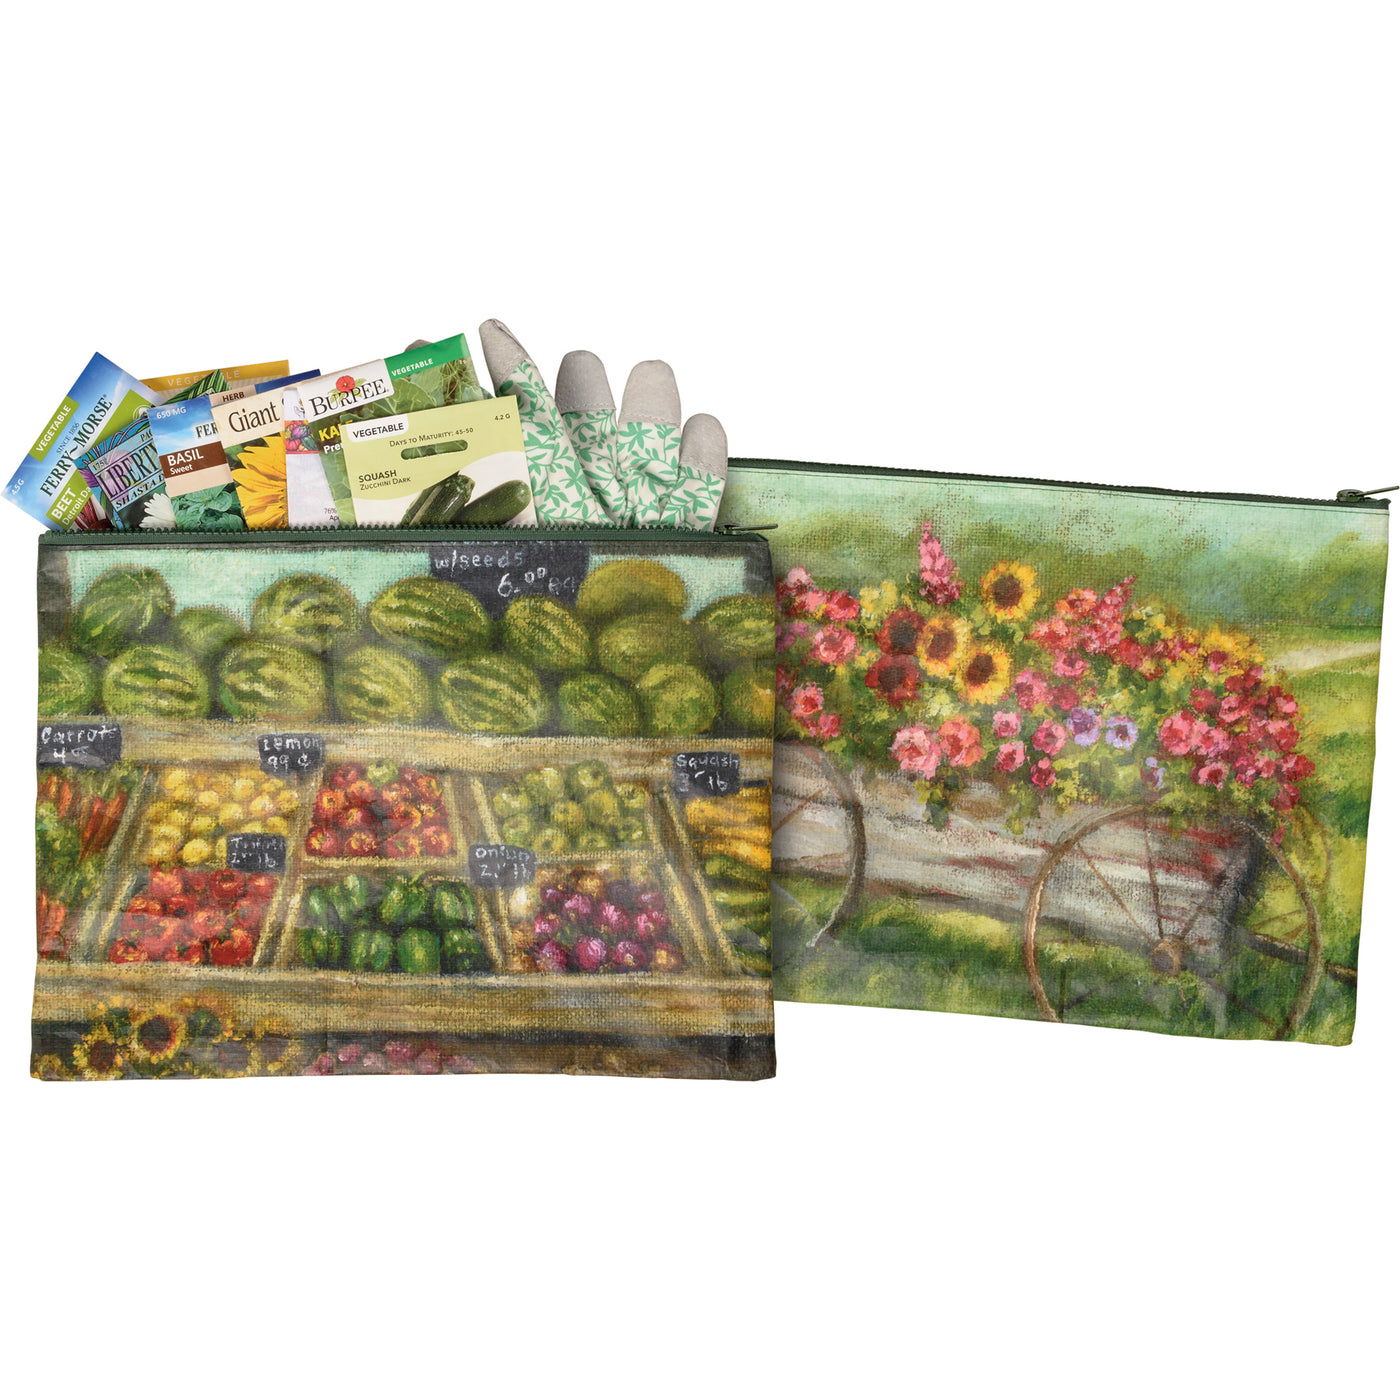 Double Sided Farm Stand Flower Cart Zippered Folder